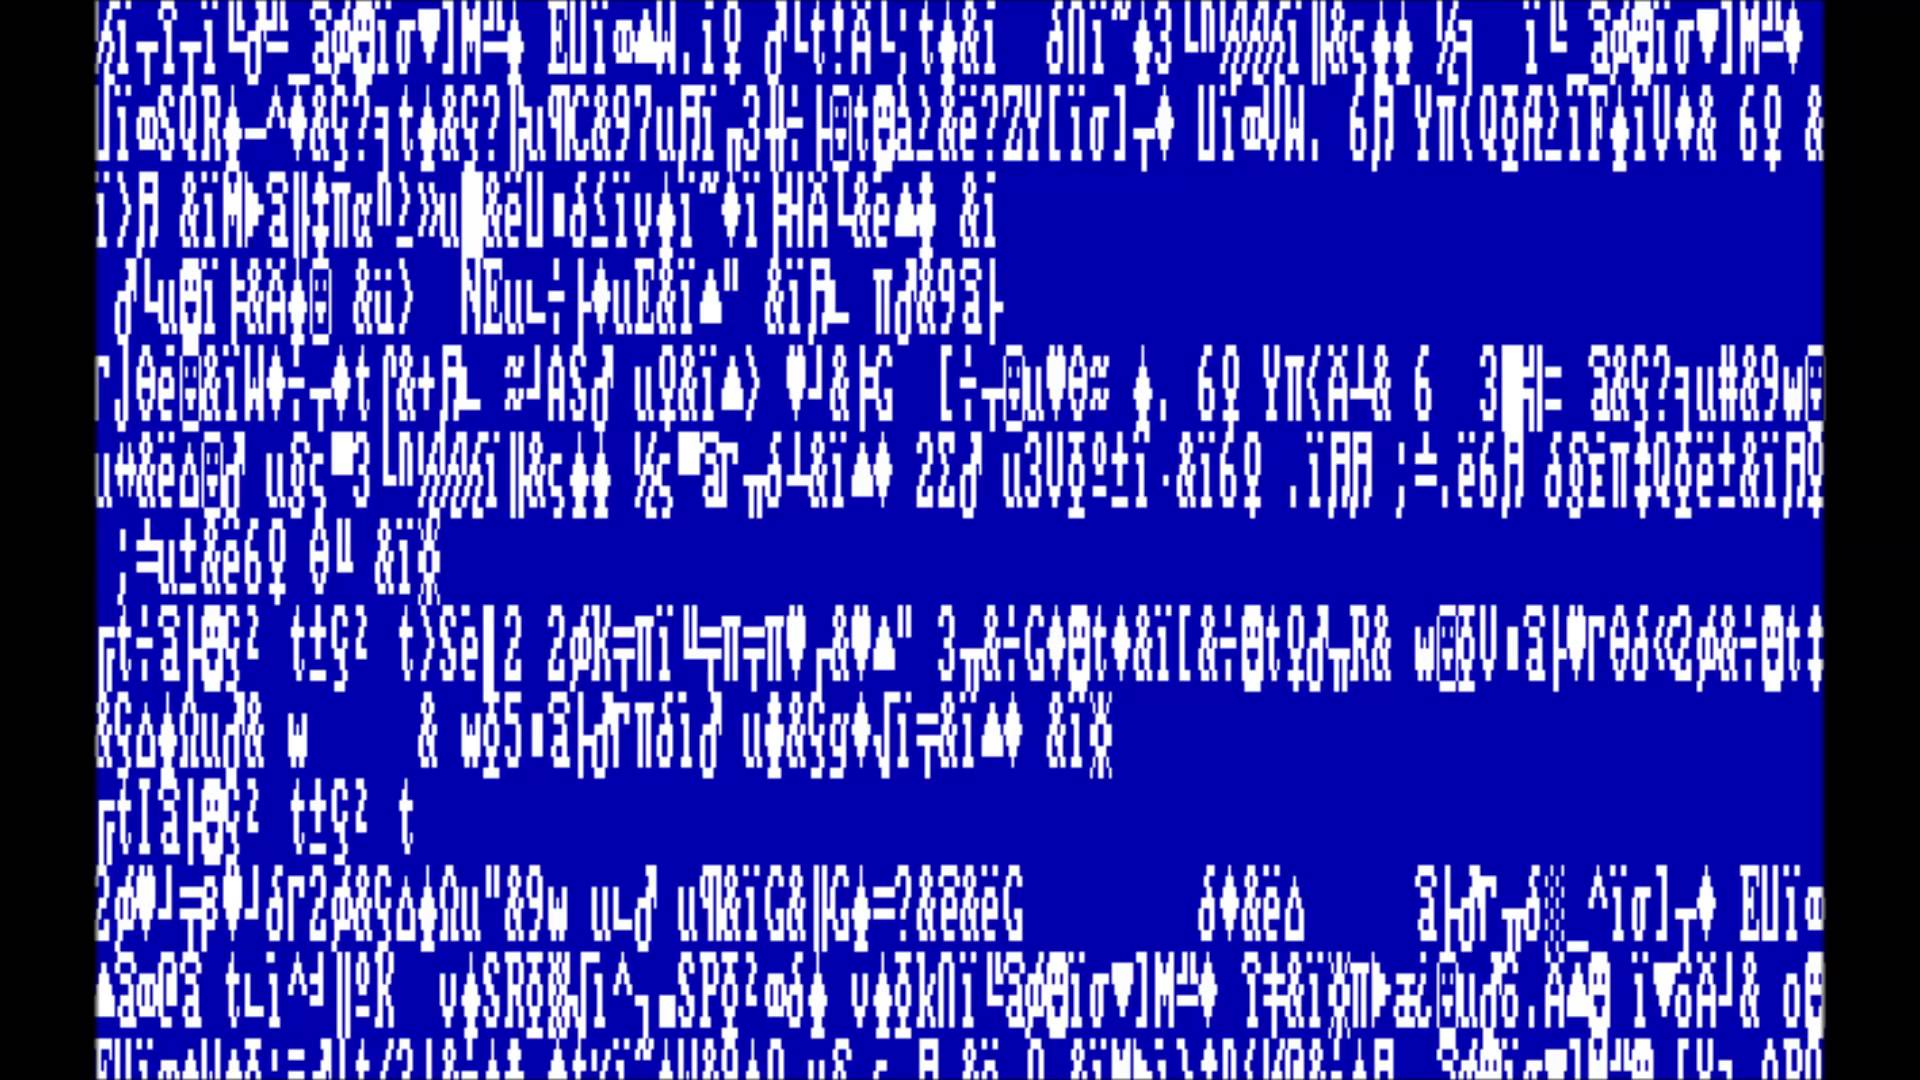 Файлы синего экрана. Синий экран смерти Windows 1. Экран бсод. Экран смерти на виндовс 1.0. Синий экран смерти Windows 1.0.